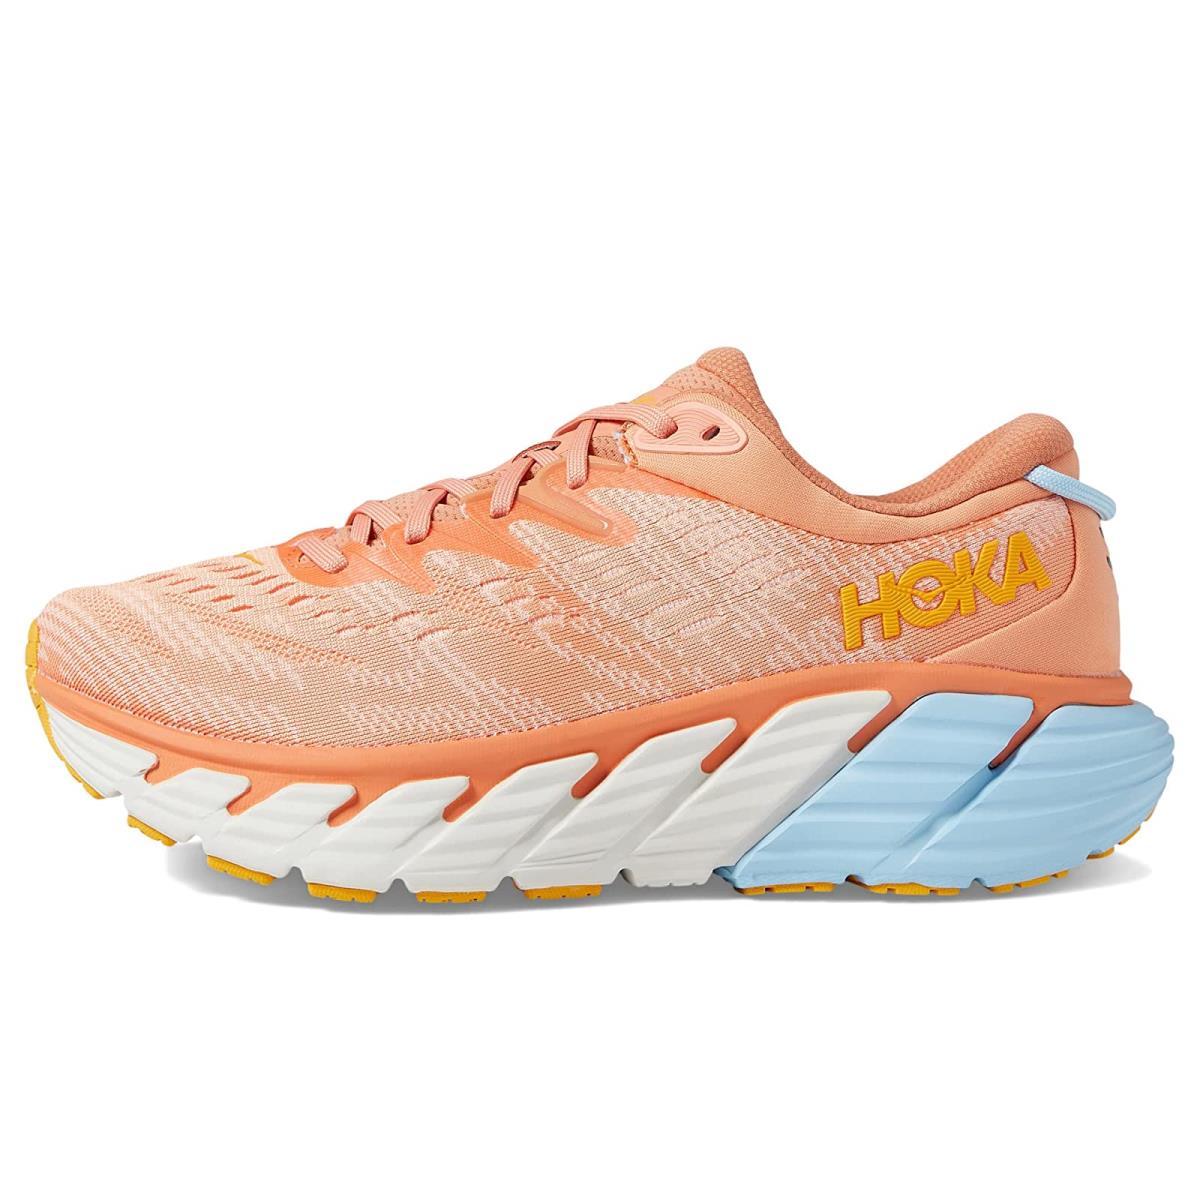 (Open Box) Hoka Gaviota 4 Women's Everyday Running Shoe - Shell Coral / Peach Parfait - Size 9.5